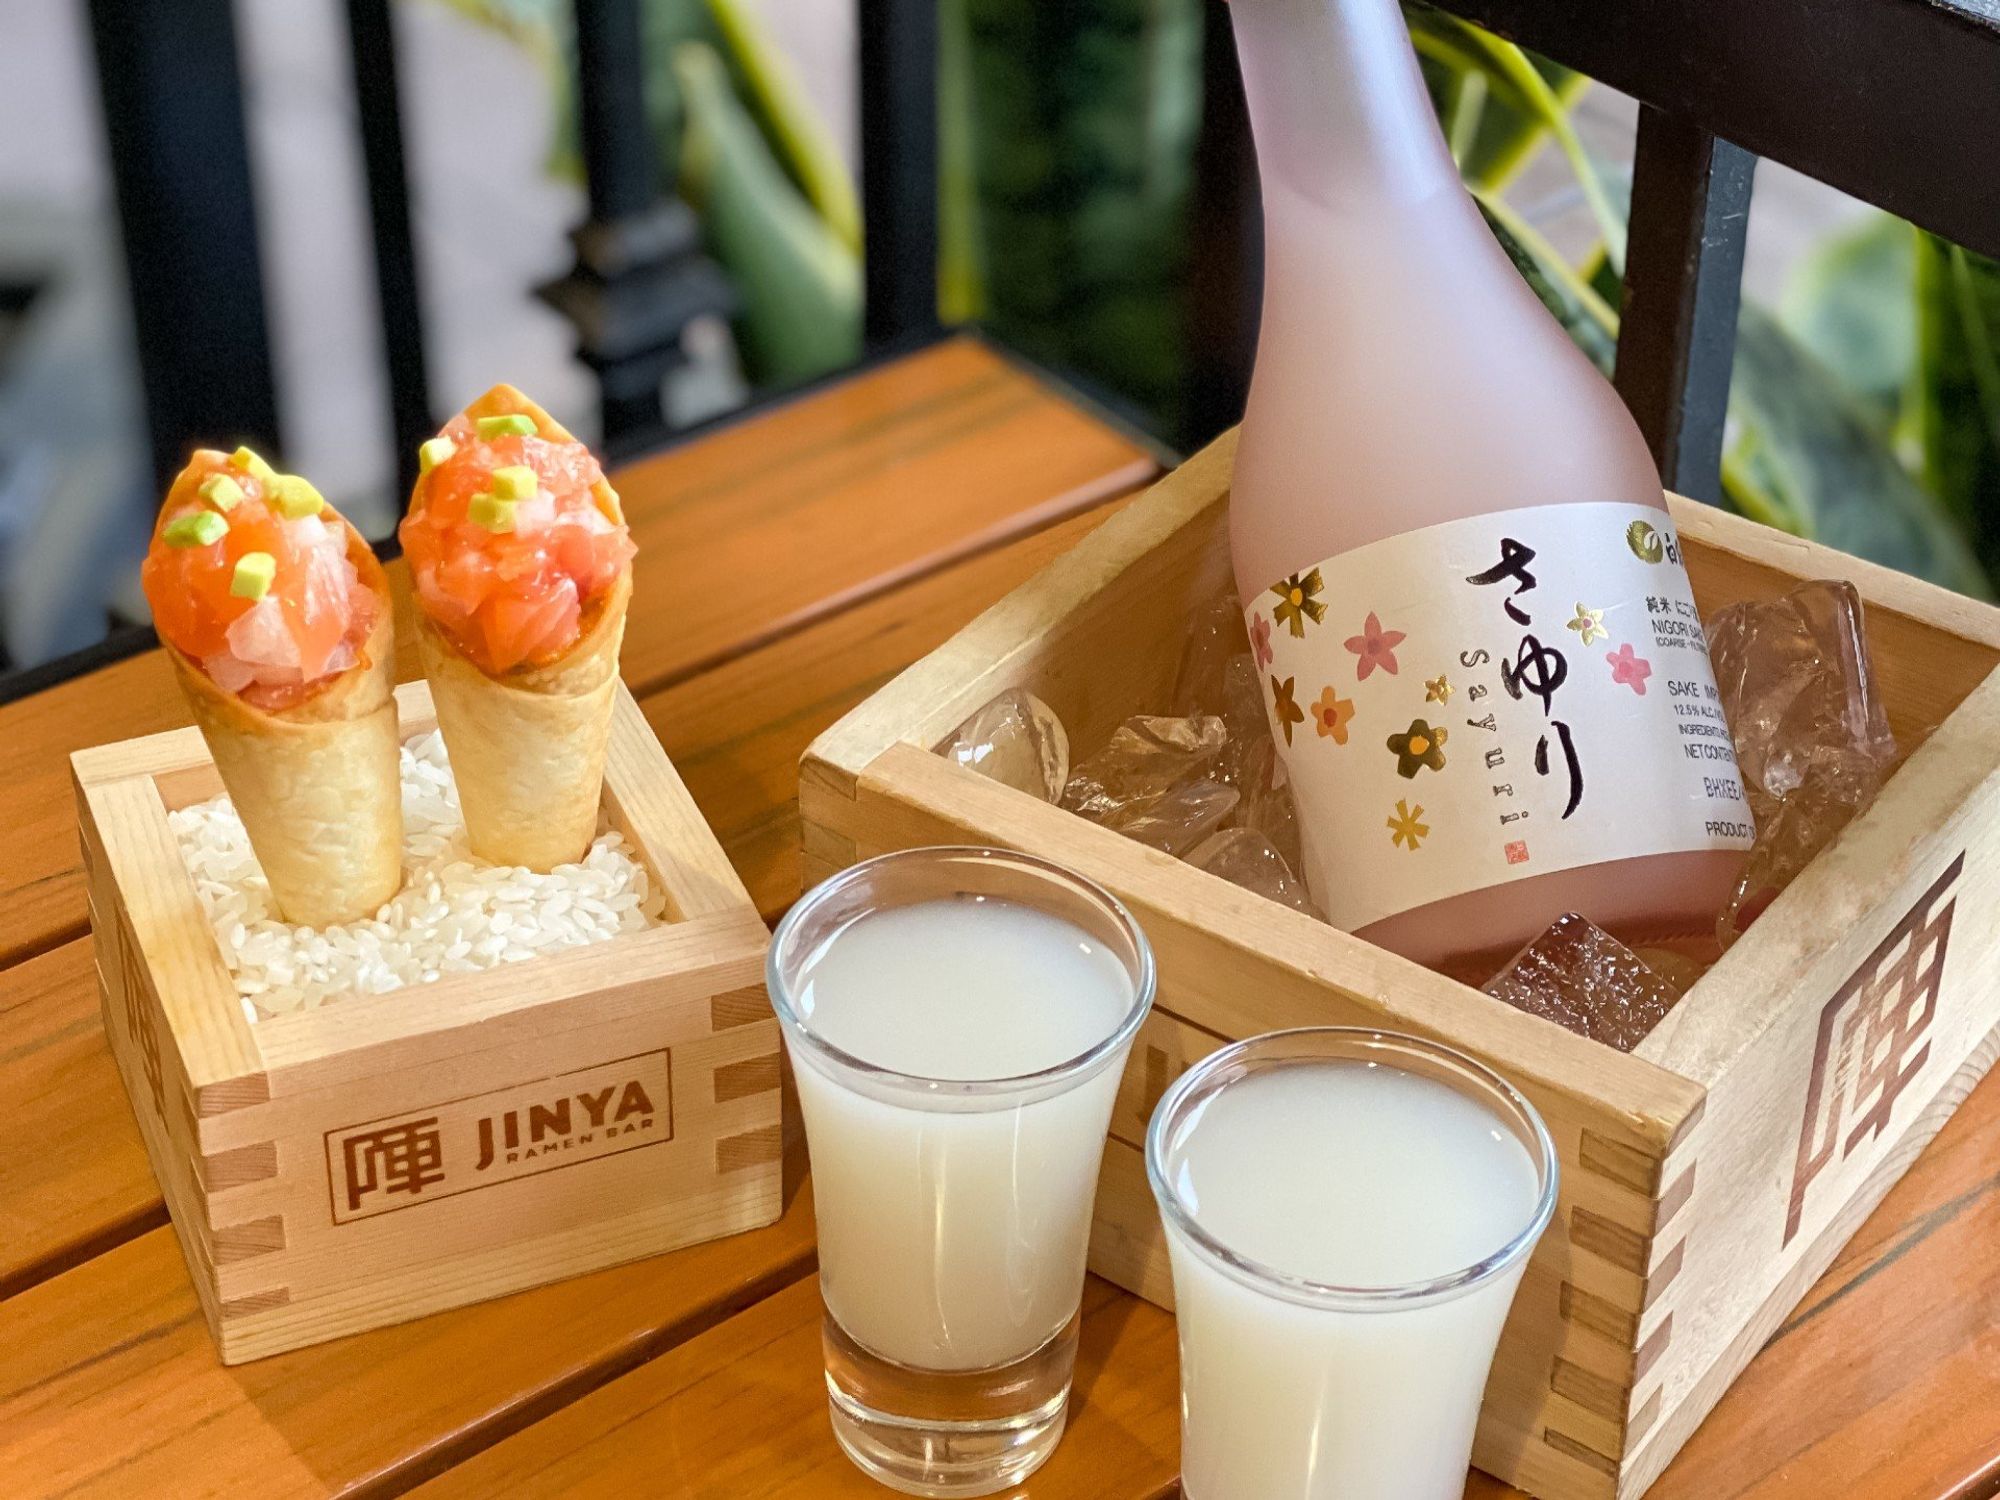 jinya sake